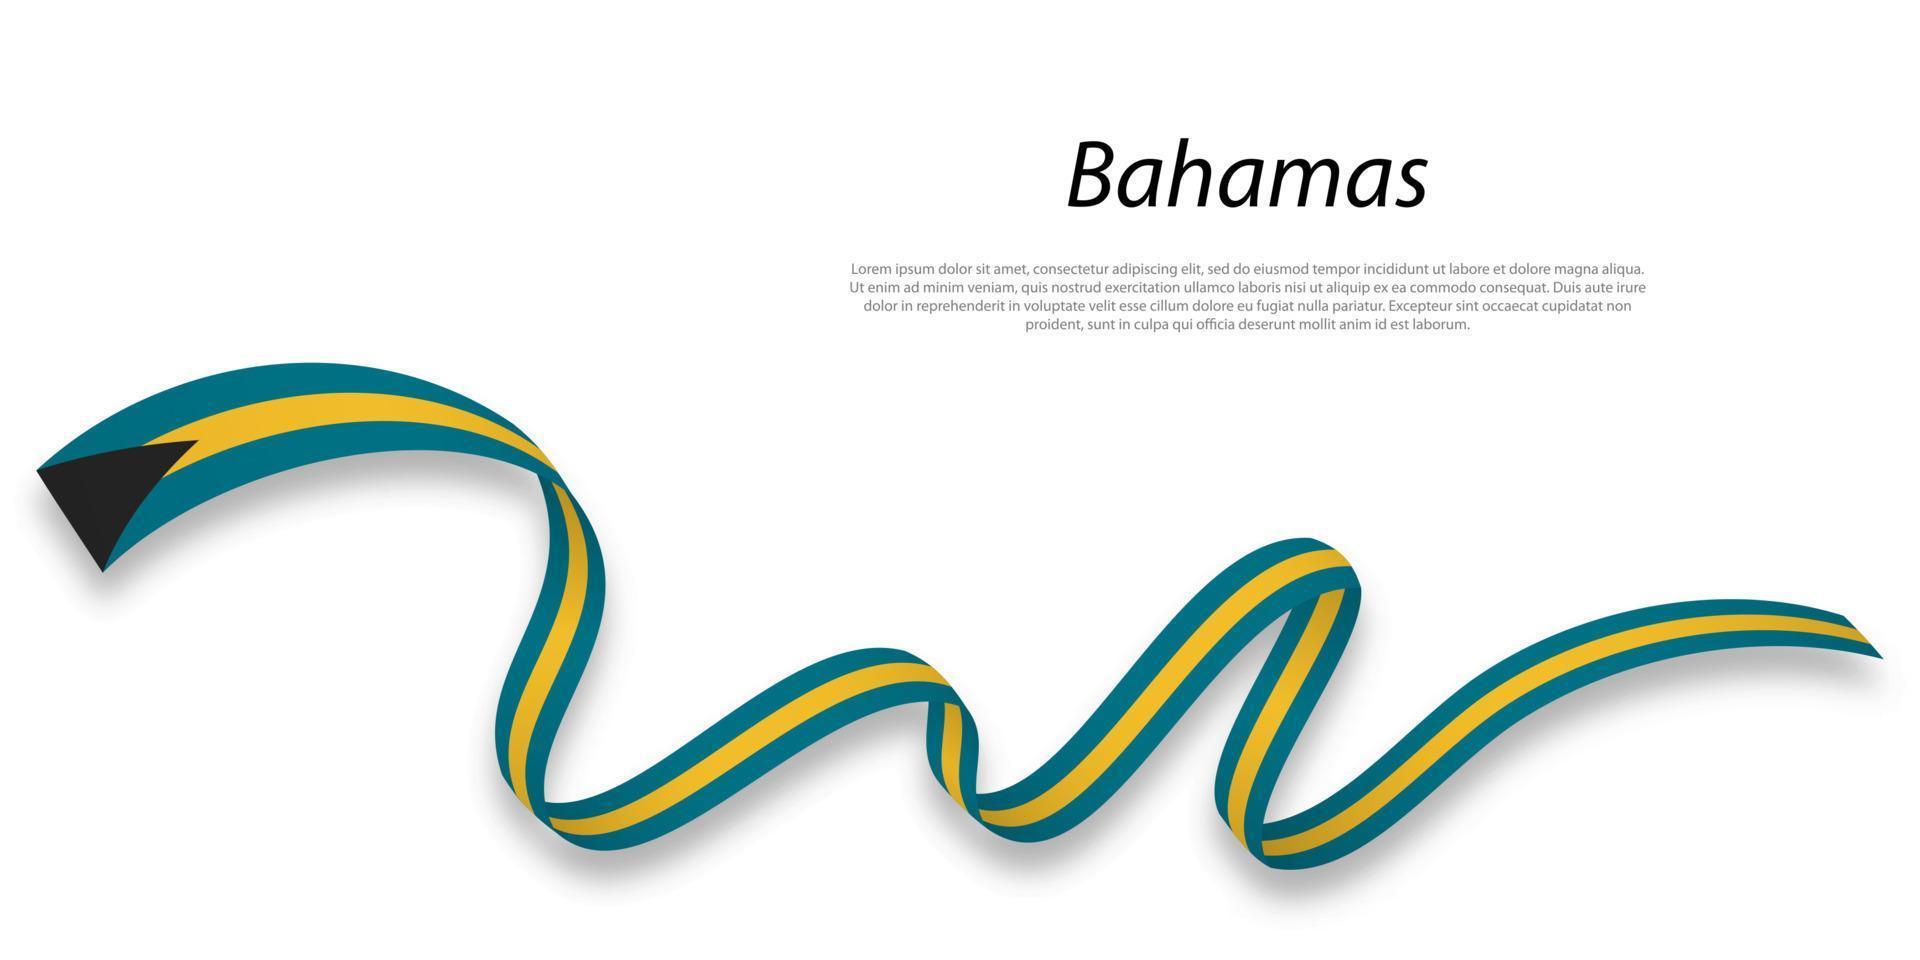 acenando fita ou bandeira com bandeira do bahamas. vetor